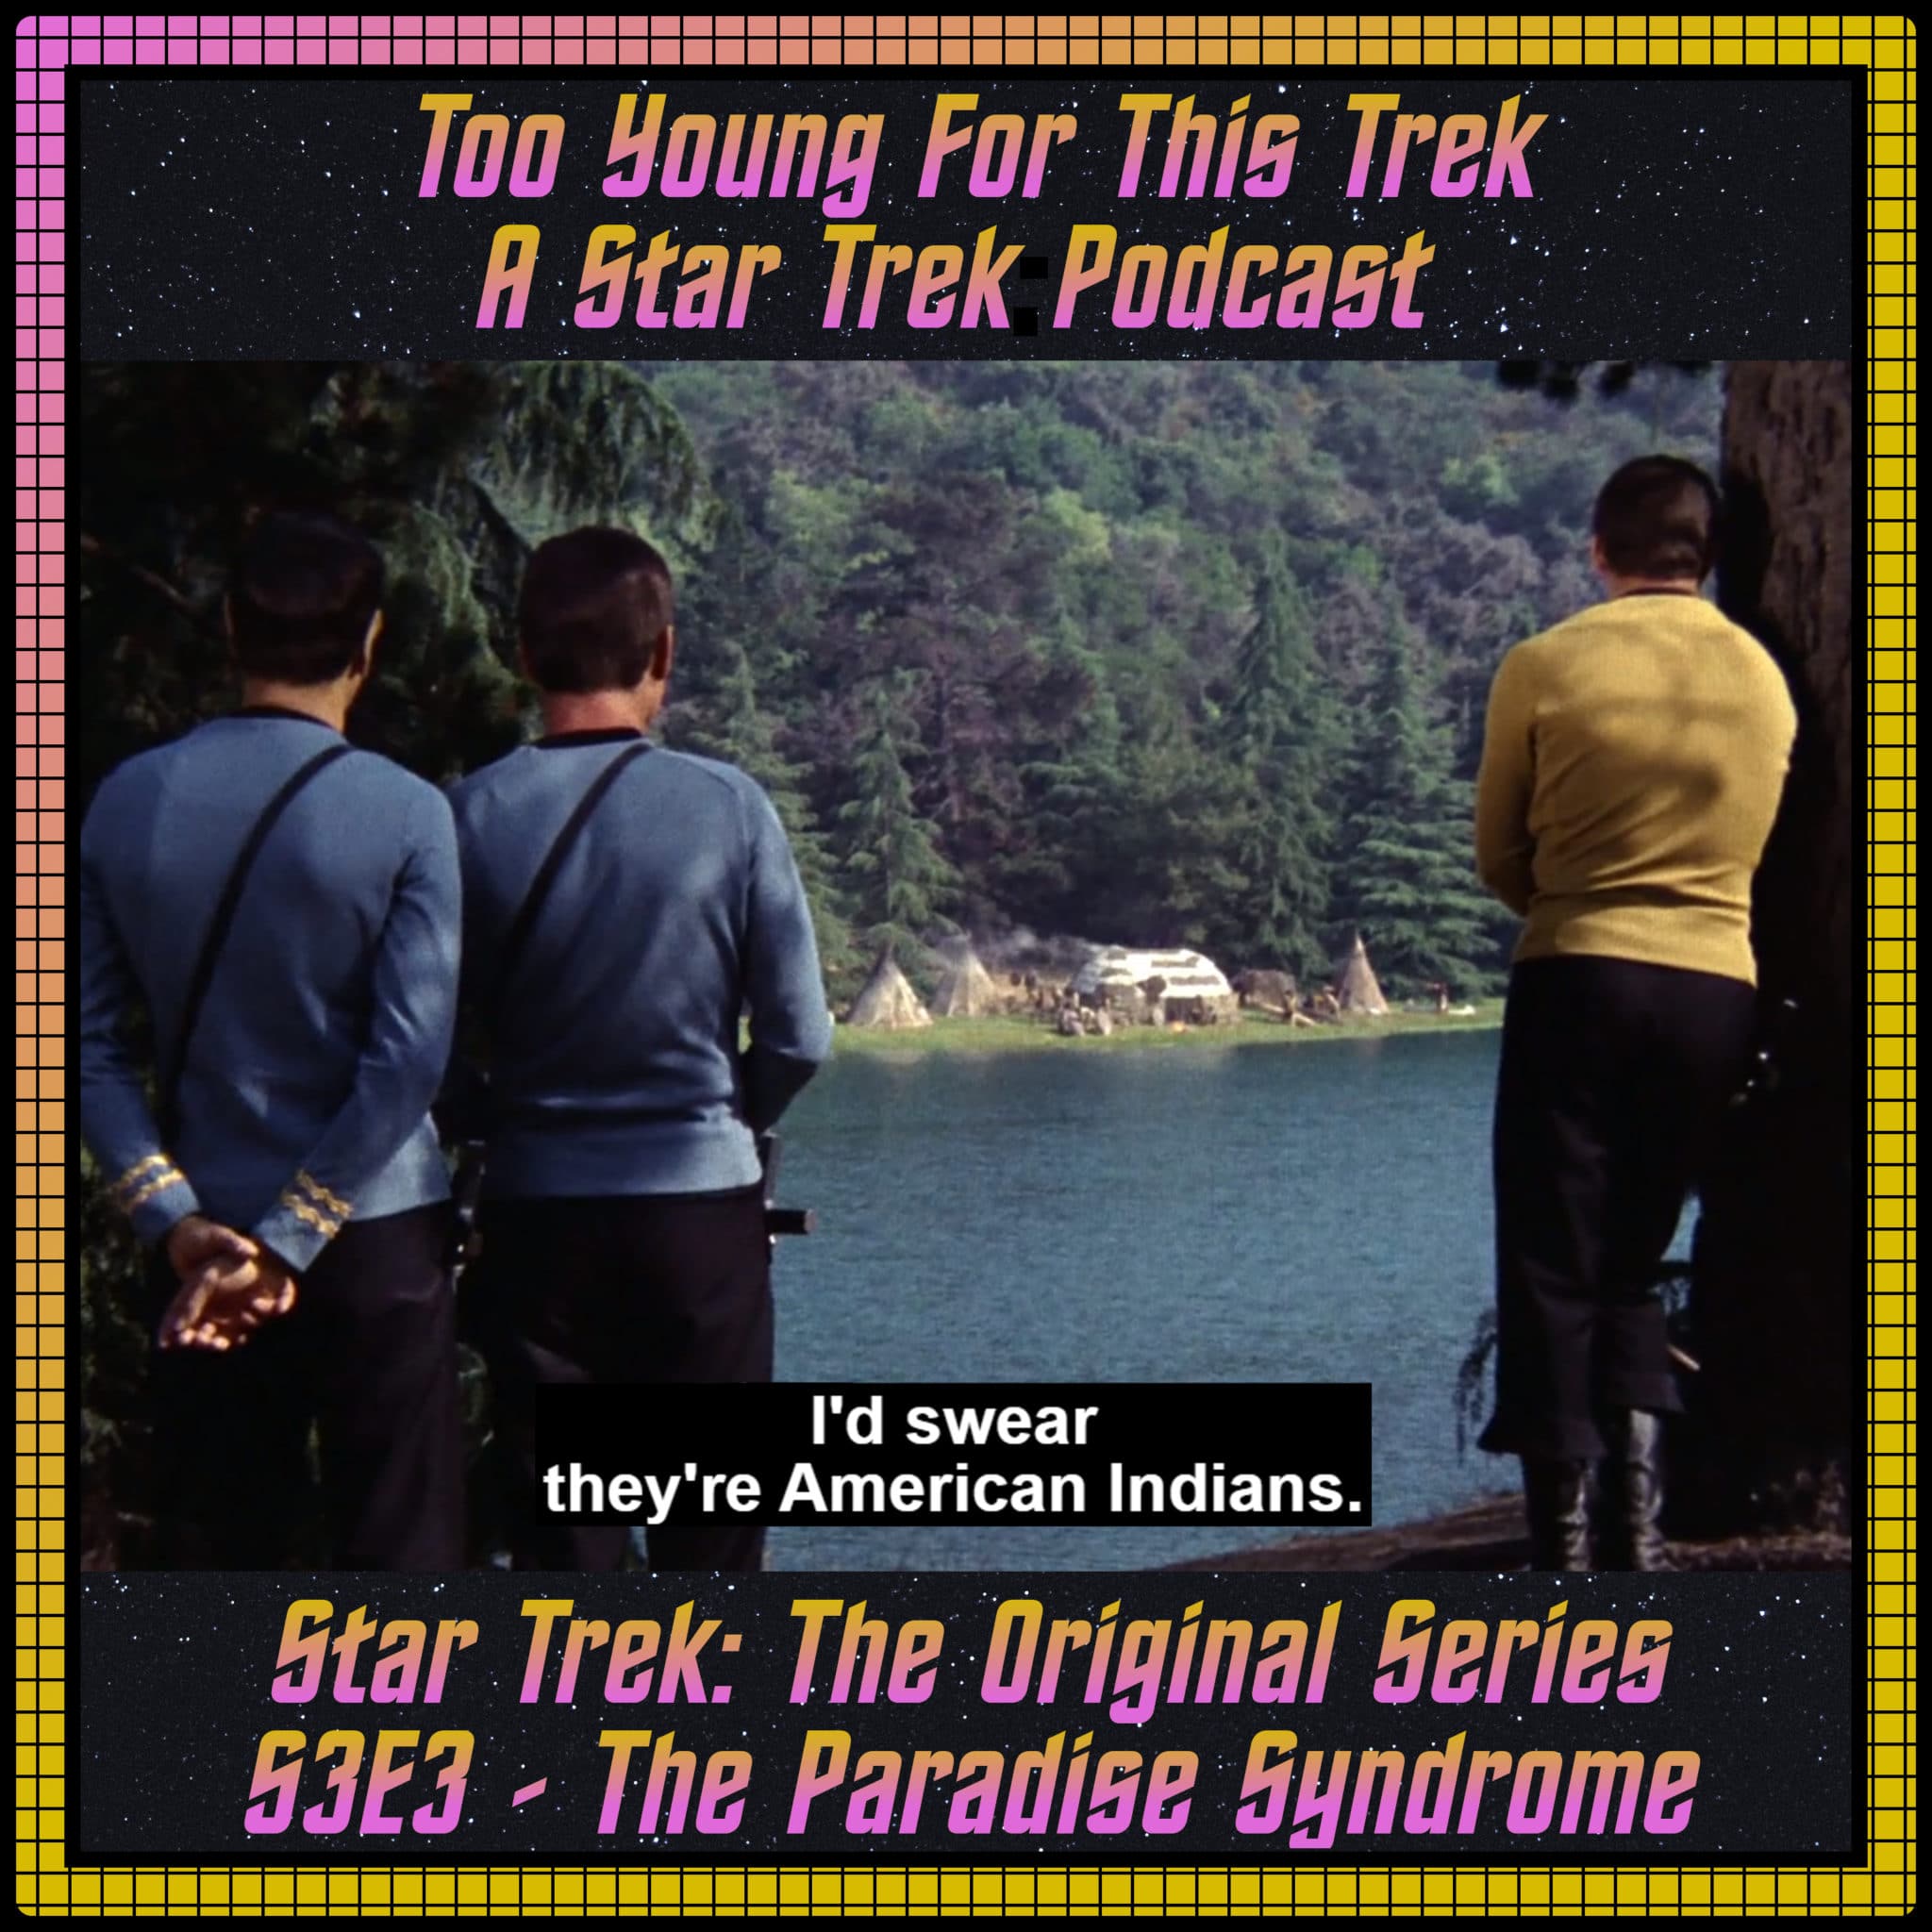 Star Trek: The Original Series S3E3 - The Paradise Syndrome